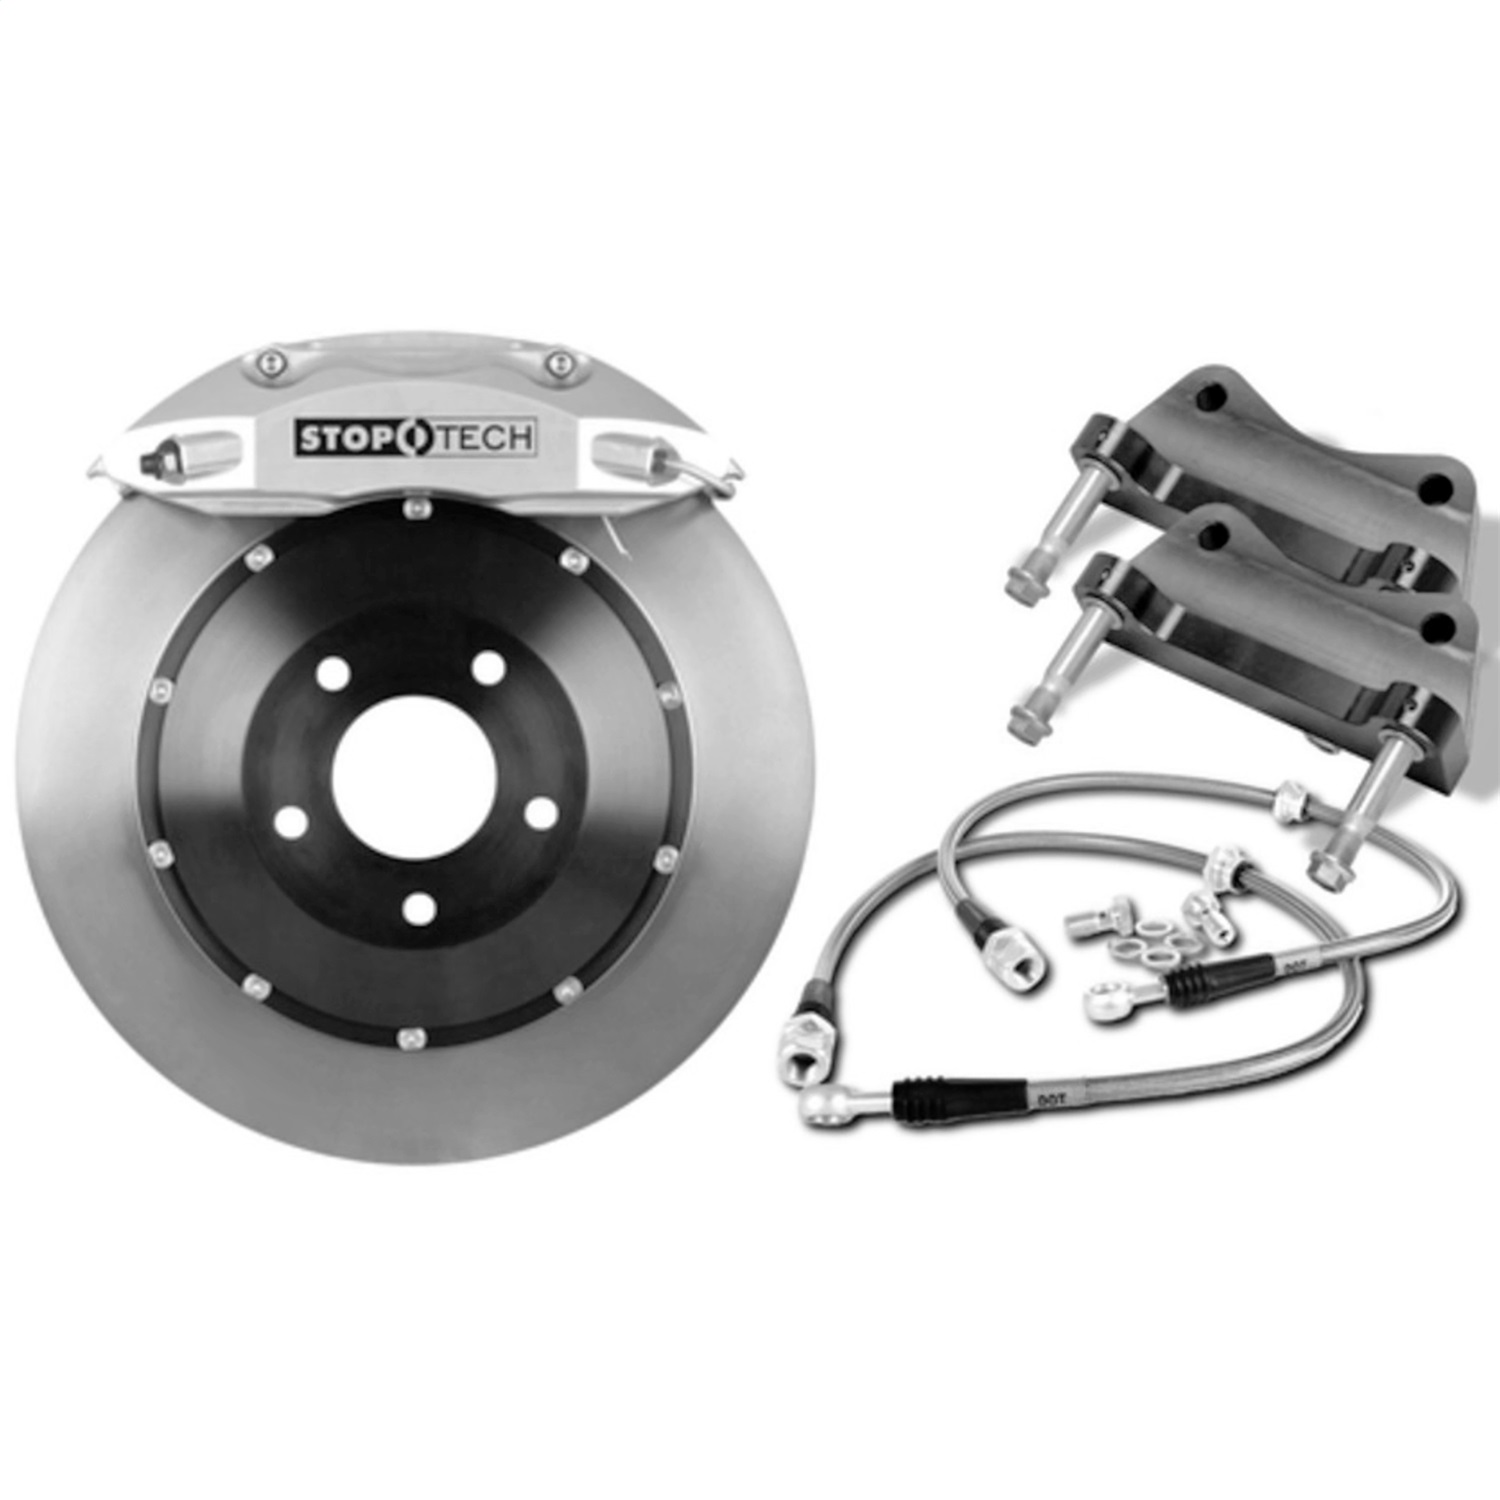 StopTech 83.521.0047.64 Big Brake Kit w/2 Piece Rotor Fits 02-10 SC430